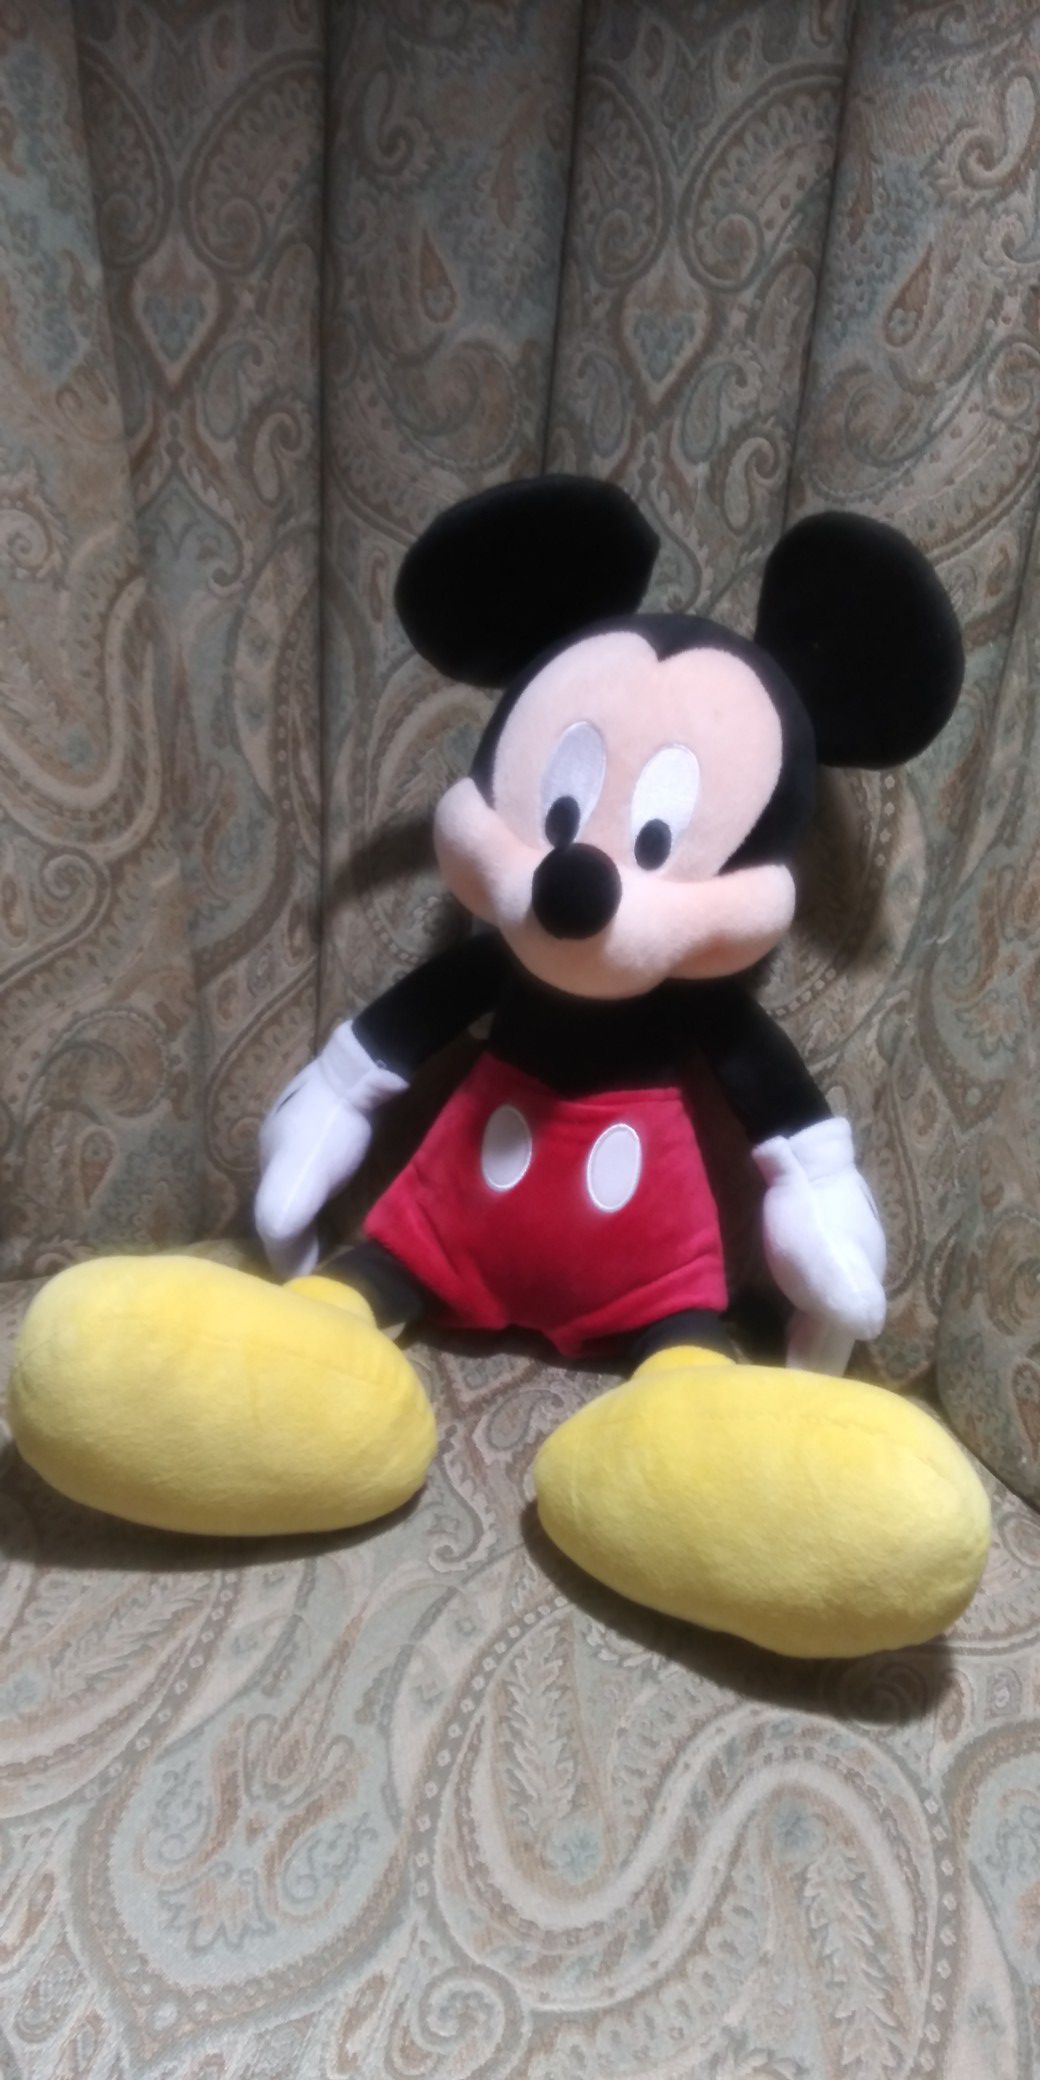 Mickey Mouse: 15" Disney Parks plush